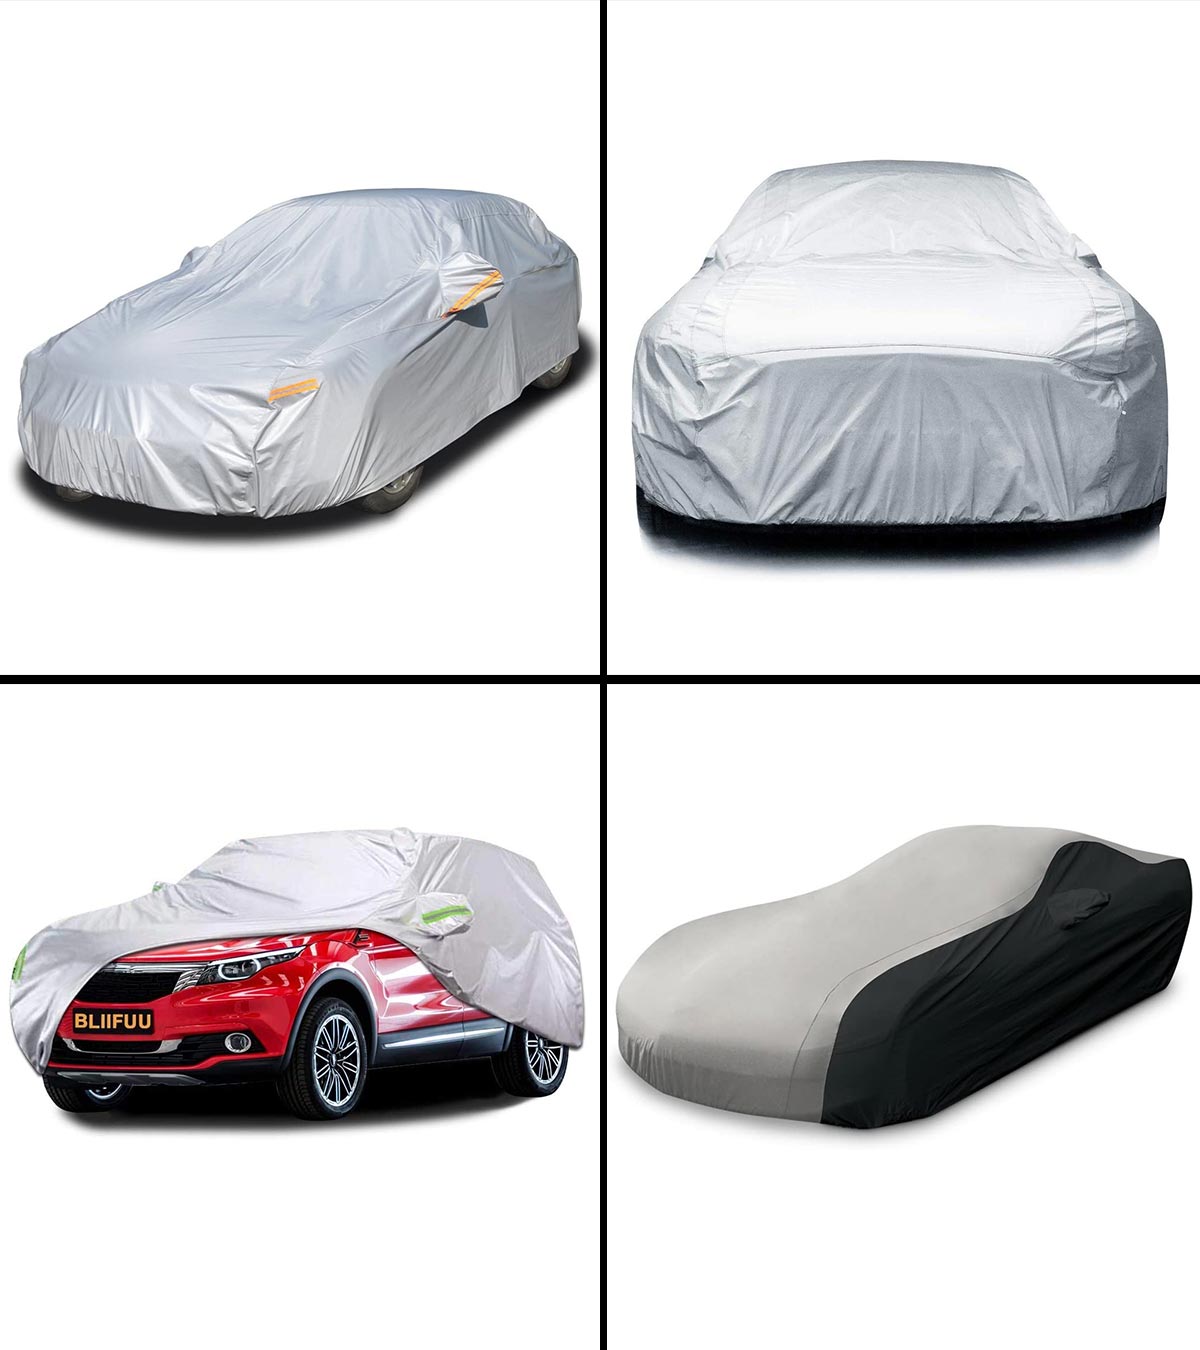 https://www.momjunction.com/wp-content/uploads/2021/04/13-Best-Car-Covers-For-Outdoors-In-2021-Banner-MJ.jpg